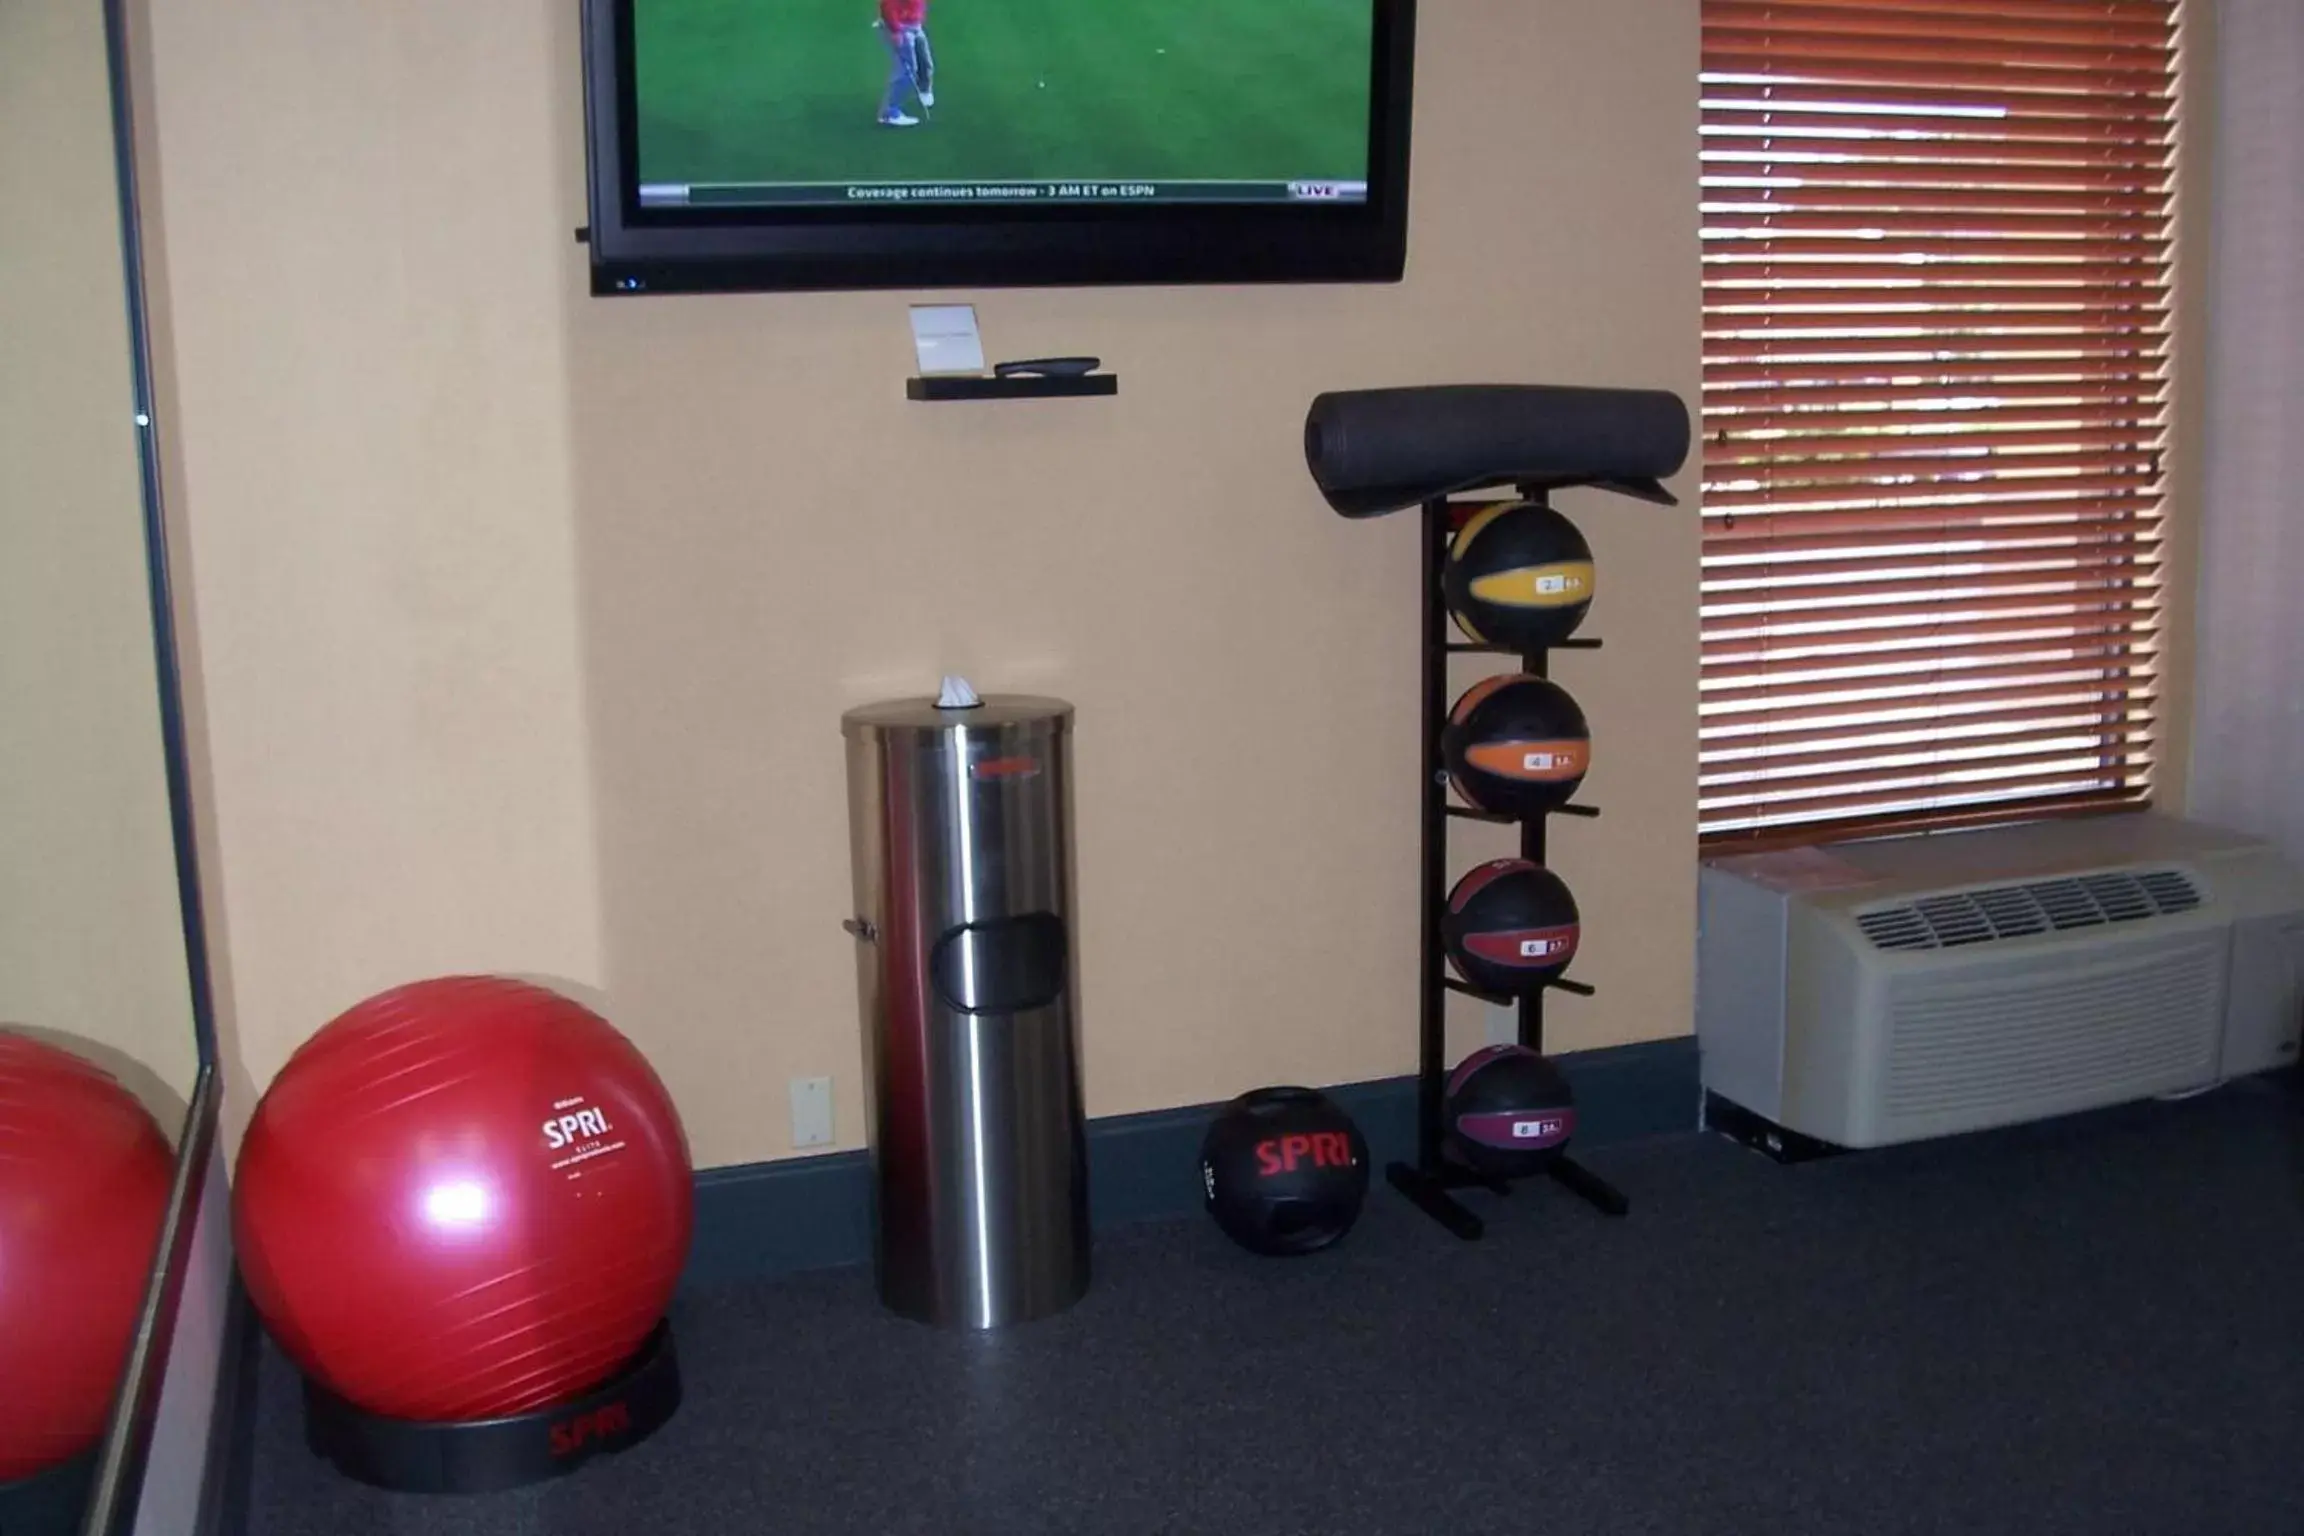 Fitness centre/facilities, Fitness Center/Facilities in Hampton Inn Washington